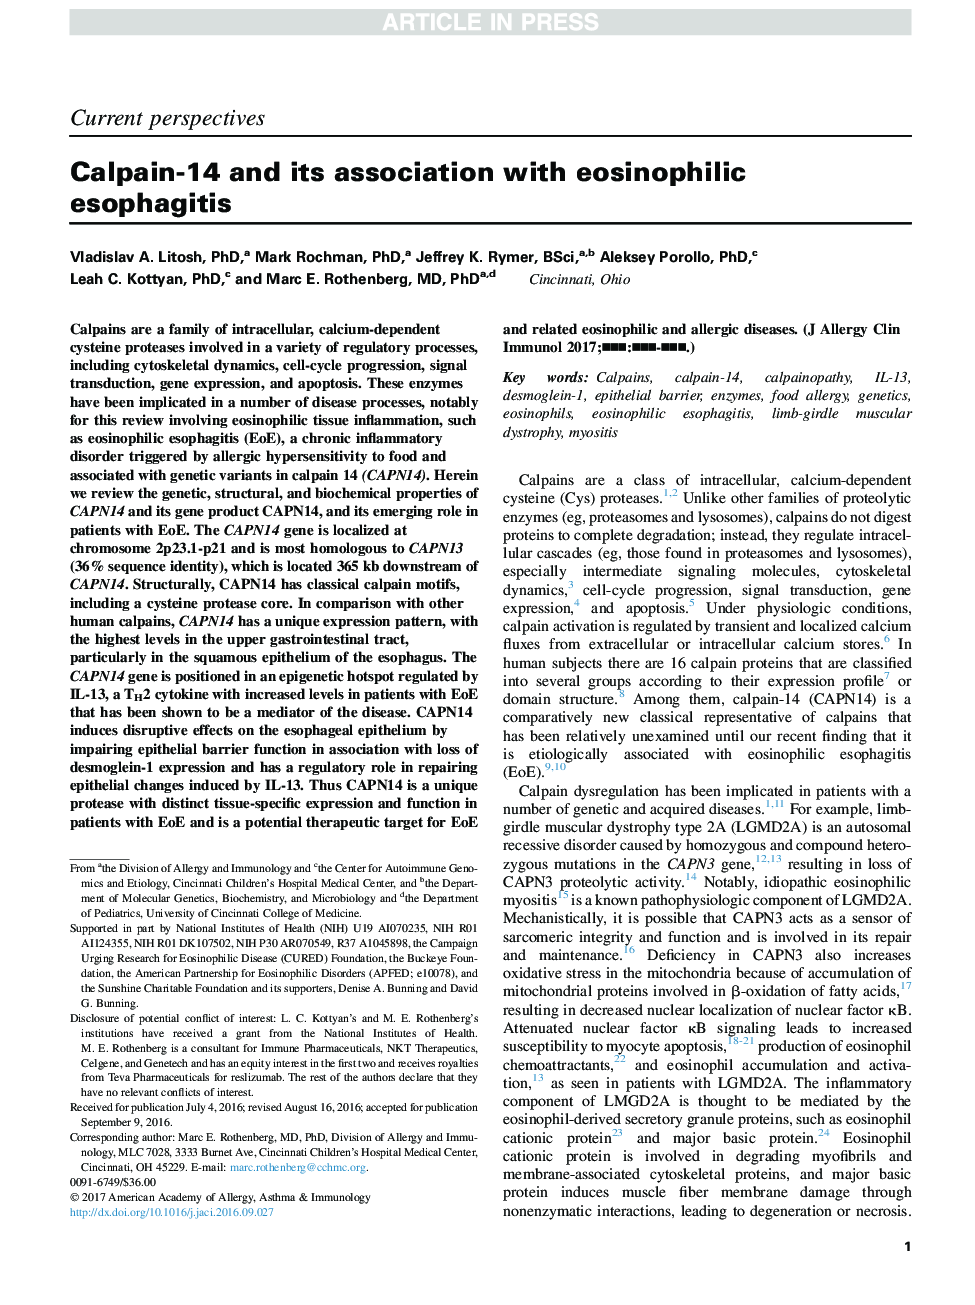 Calpain-14 and its association with eosinophilic esophagitis